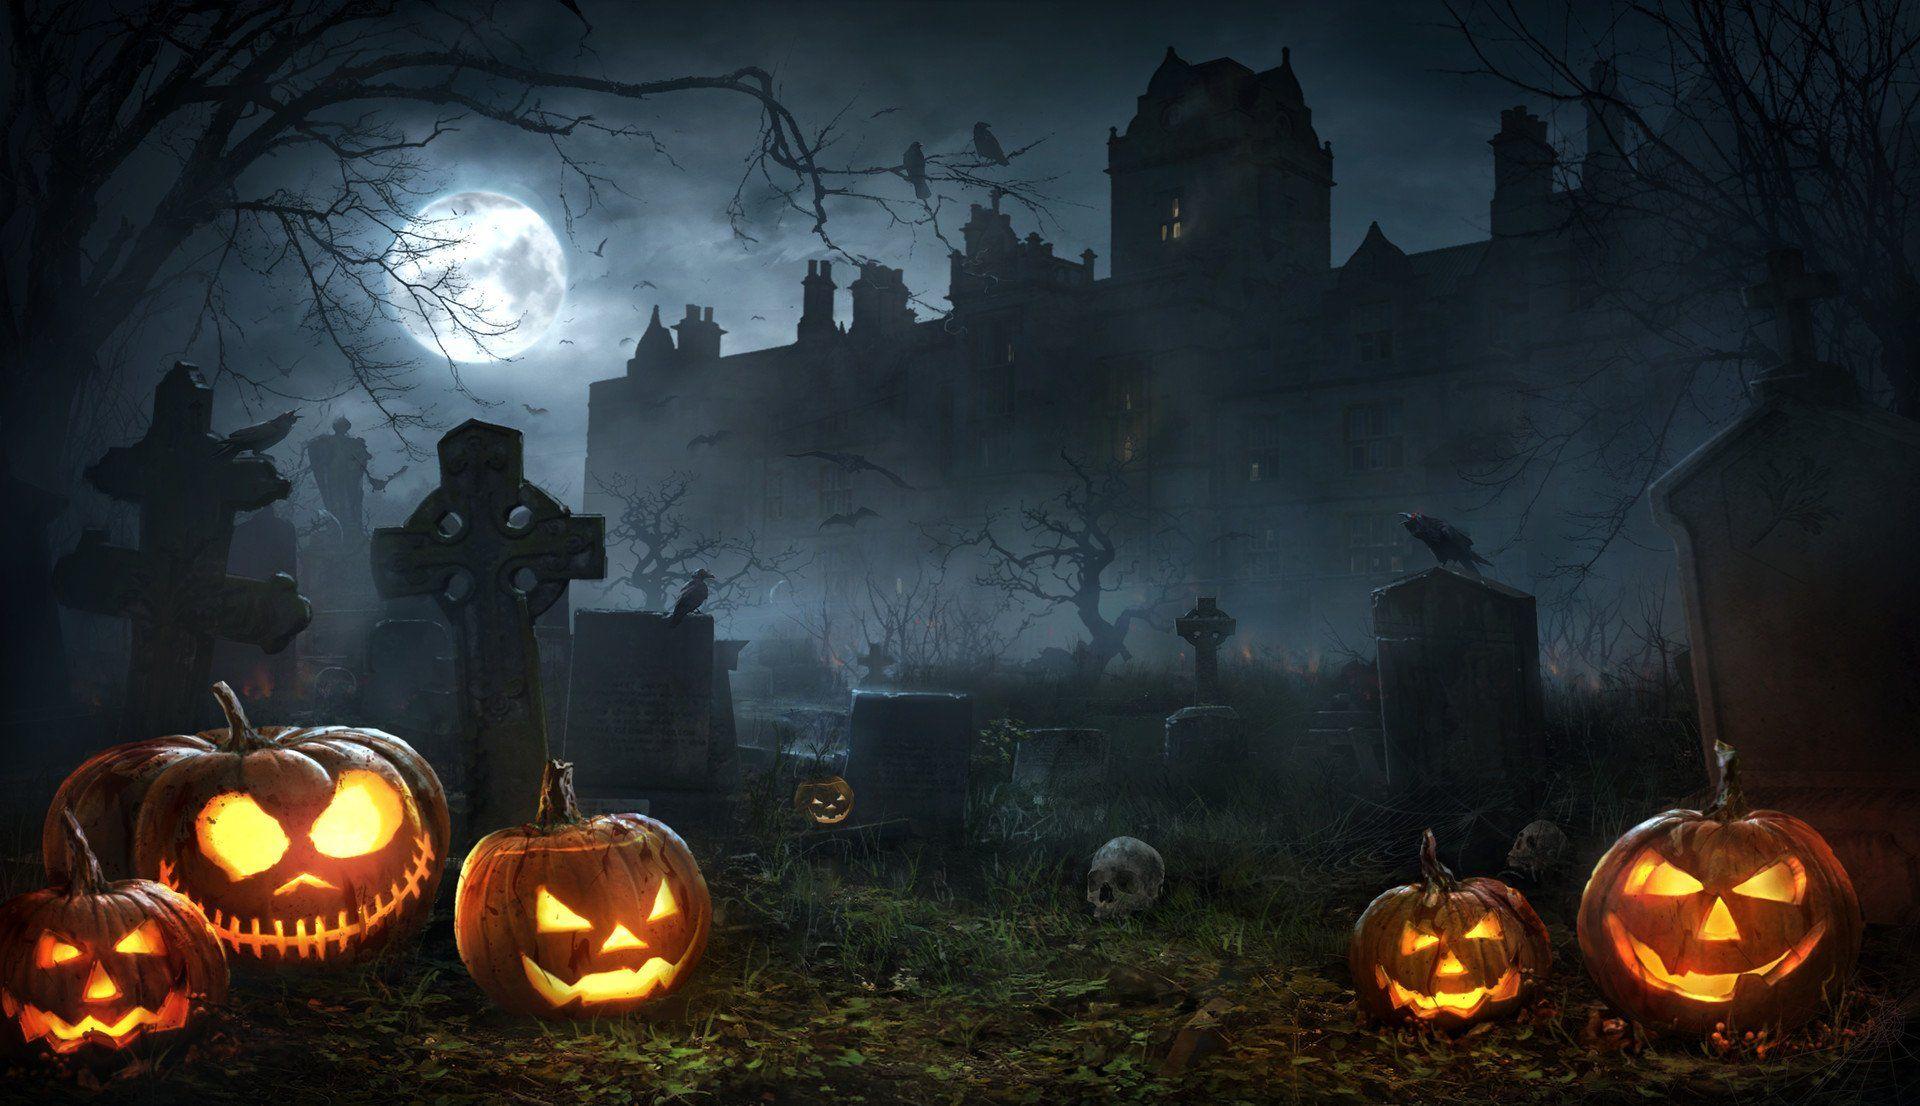 Spooky Graveyard Wallpapers - Top Free Spooky Graveyard Backgrounds ...